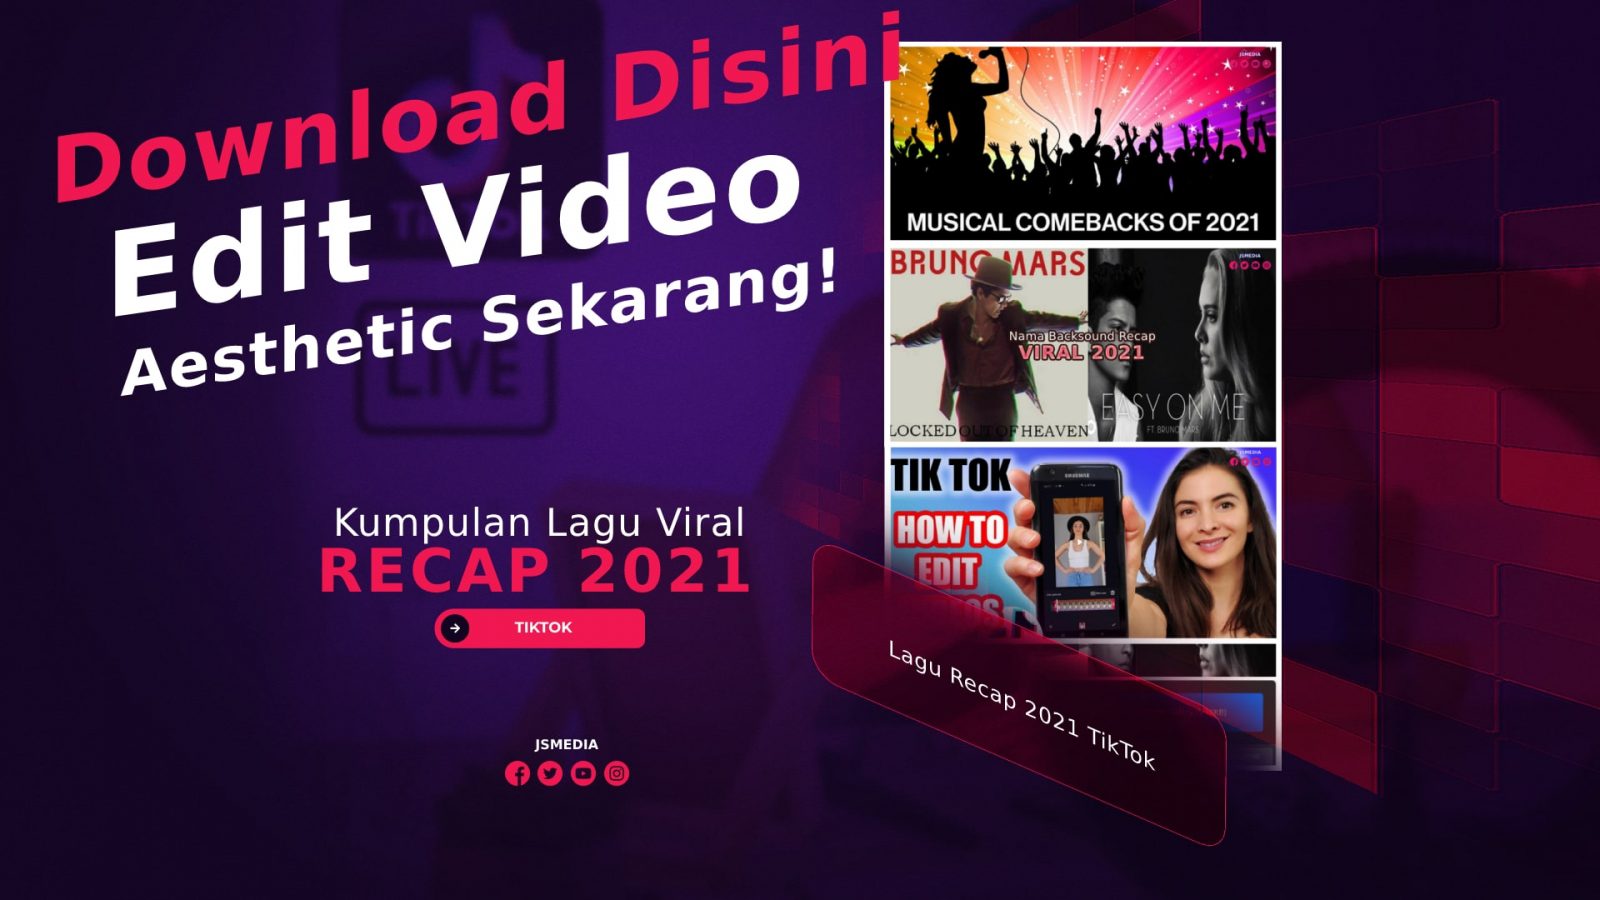 Kumpulan Lagu Recap 2021 TikTok: Download Disini